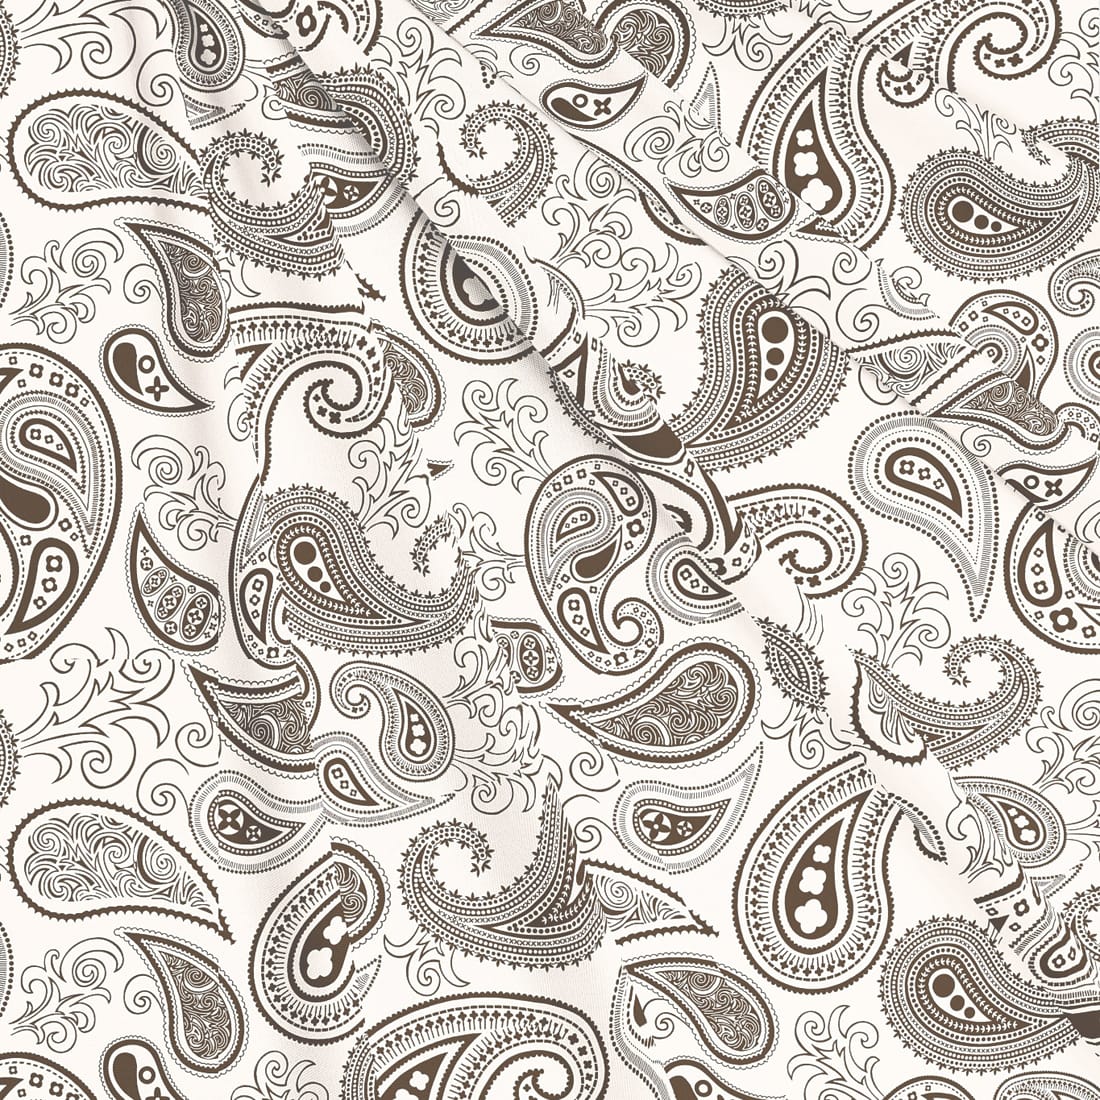 Soft Aqua 144 TC Floral Print Cotton Fabric(231 cms) online in India